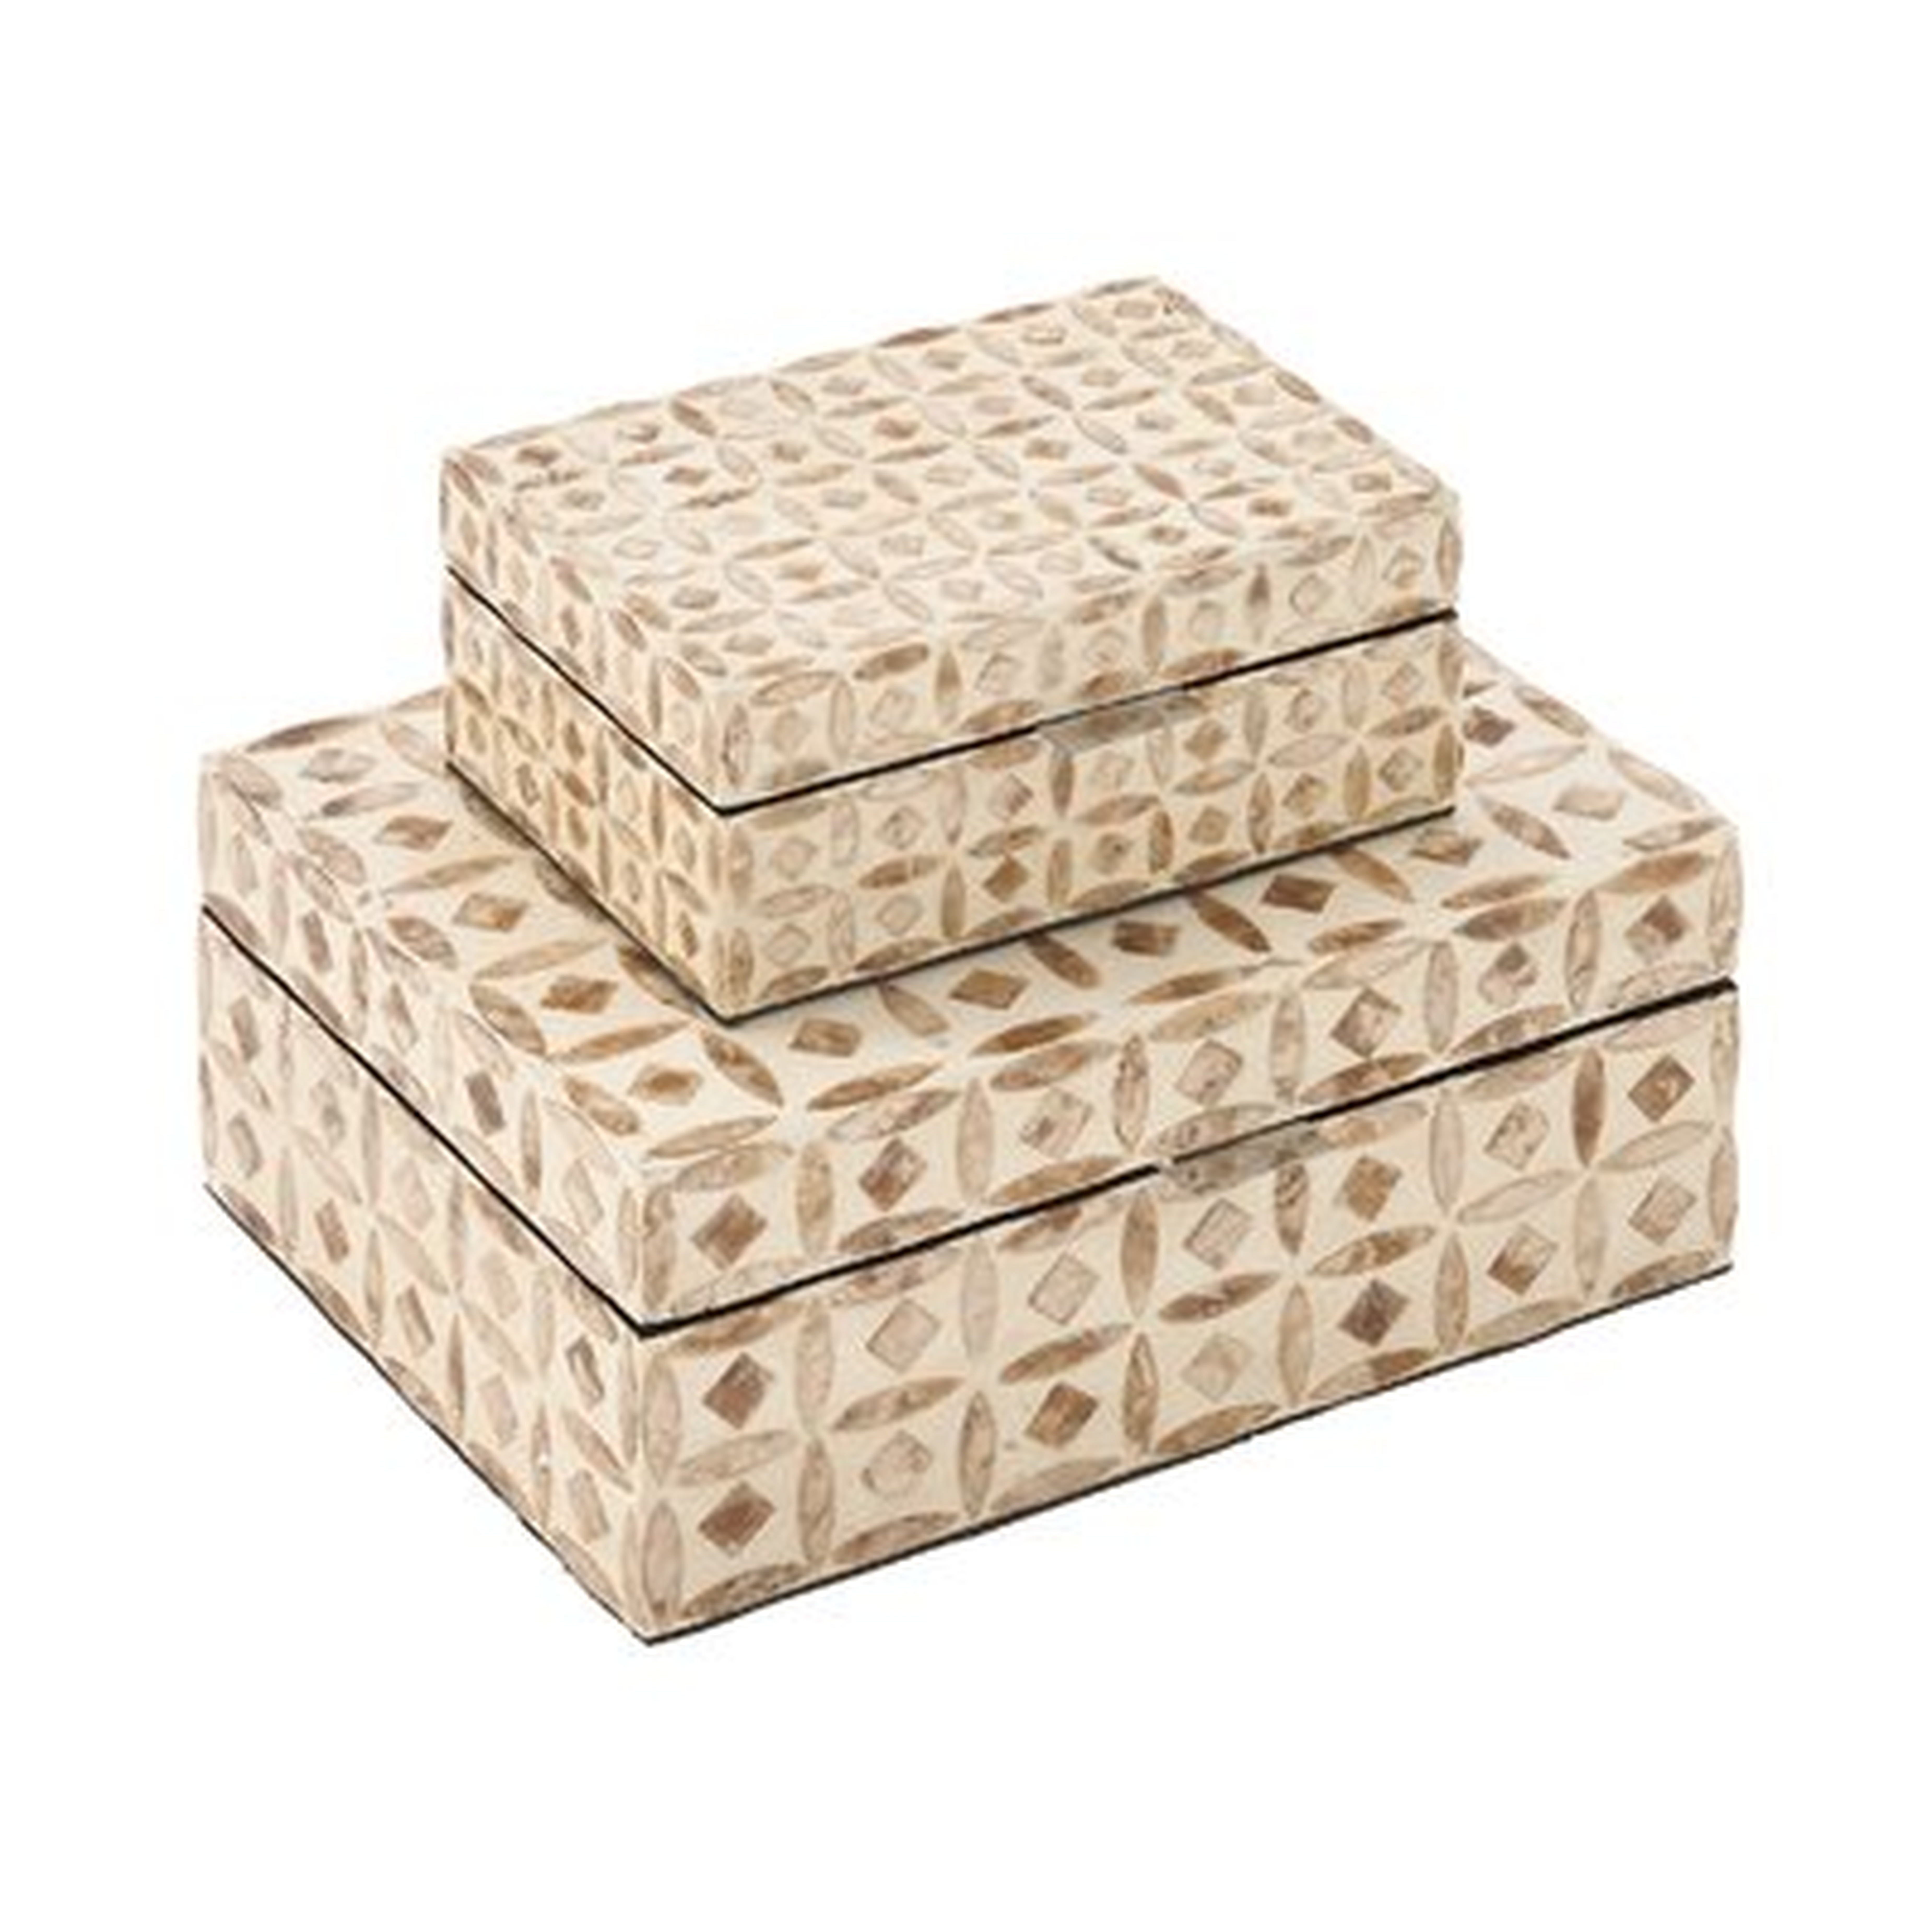 2 Piece Decorative Box Set - Birch Lane